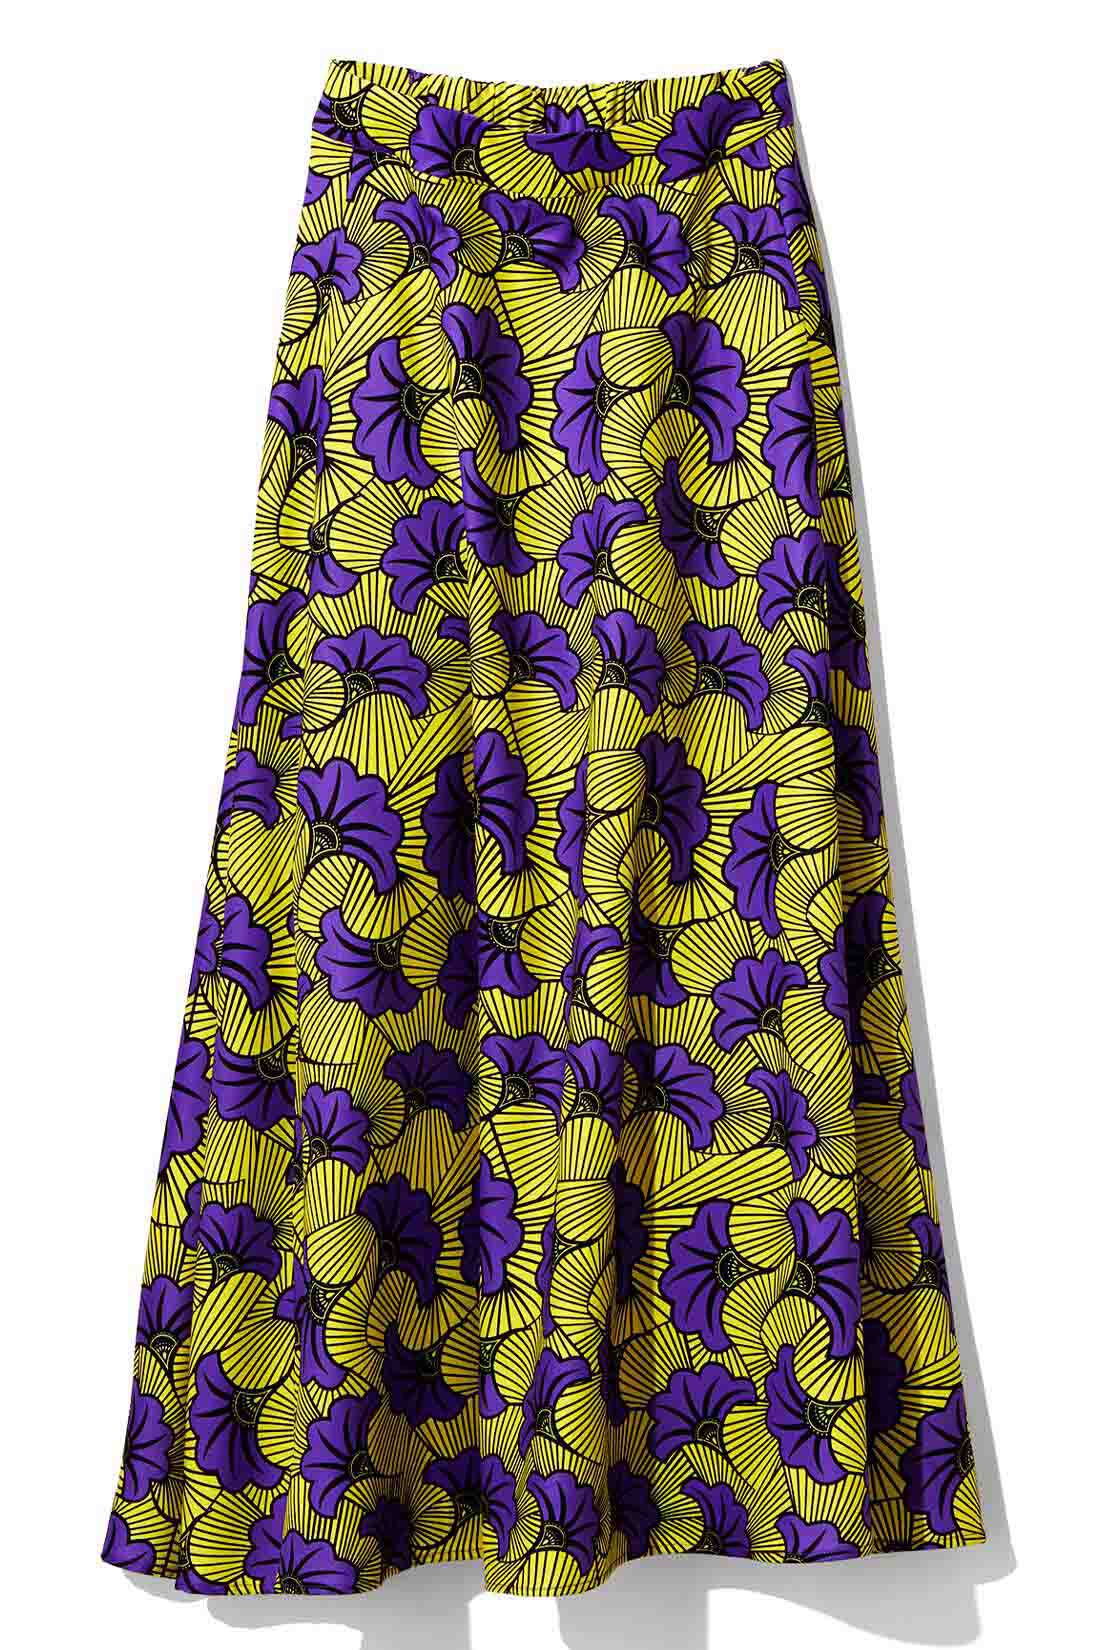 MEDE19F|MEDE19F　アフリカンプリント柄スカート|〈イエロー〉幸福や美を象徴する柄。成功や富を招くといわれる。